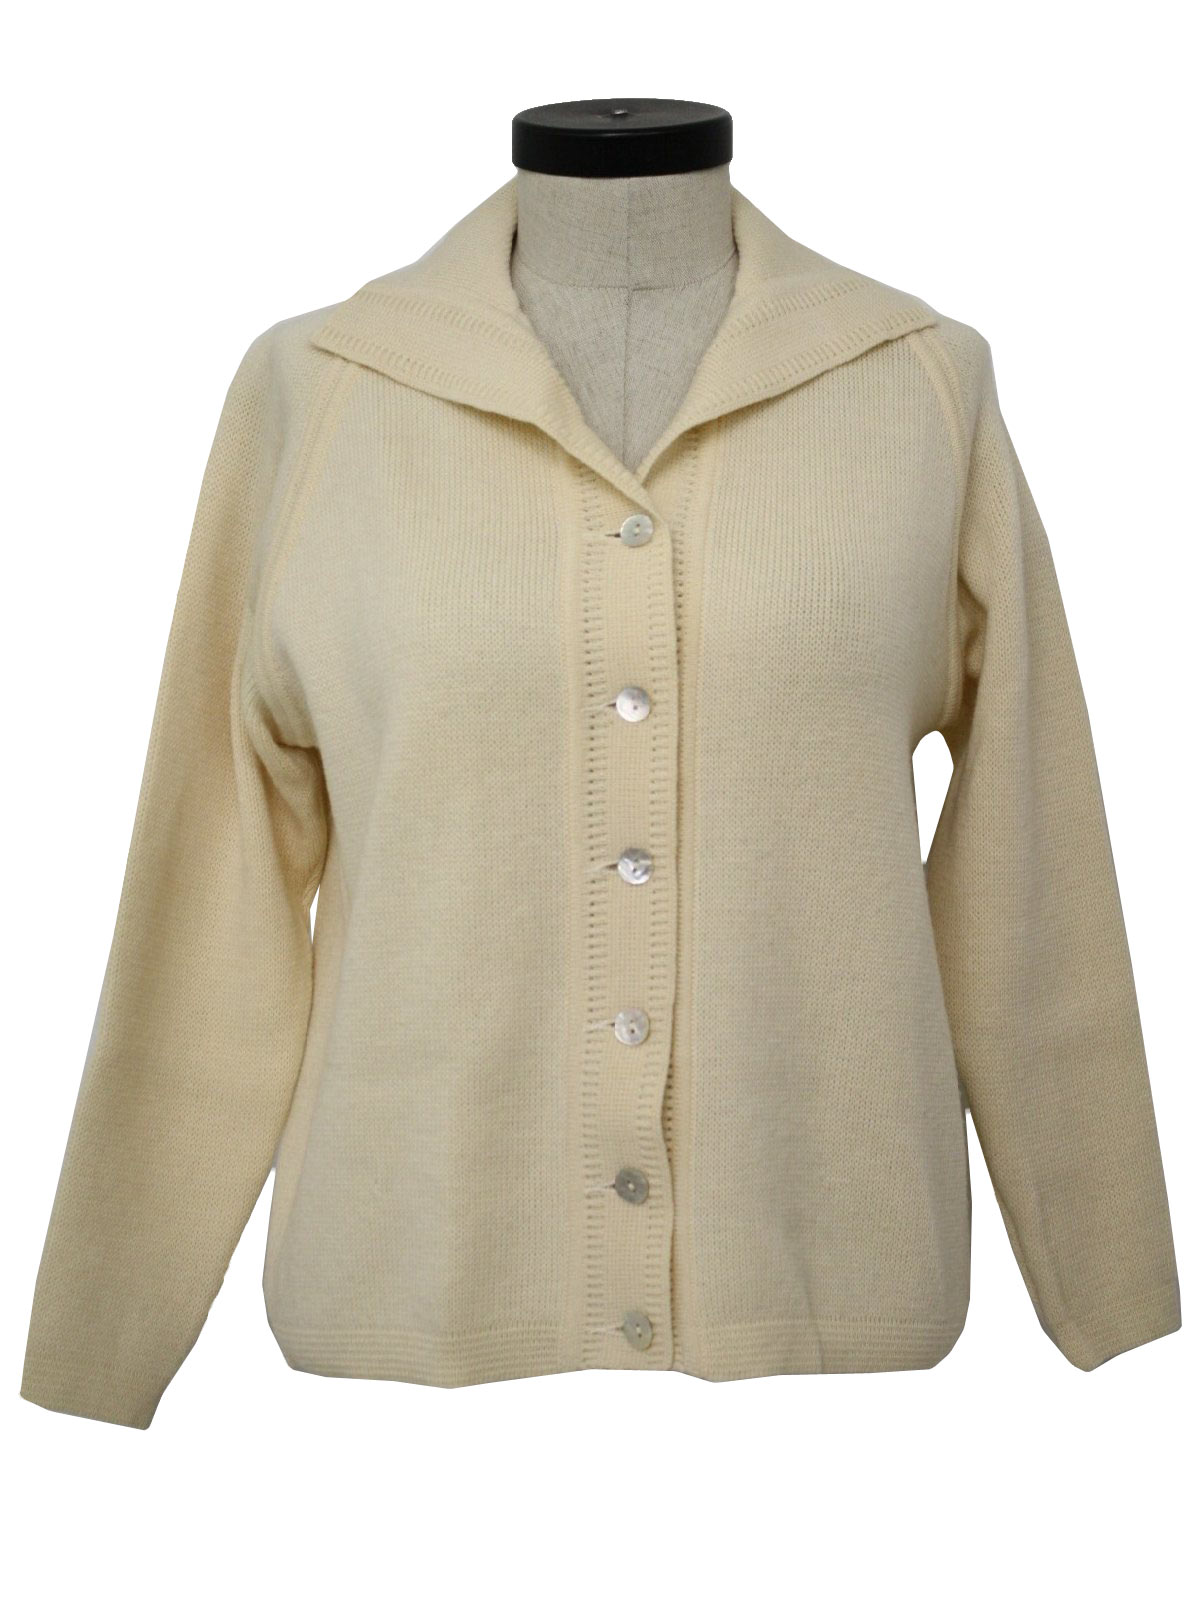 1960 s macys made in belgium womens cardigan sweater 60s macys made in ...